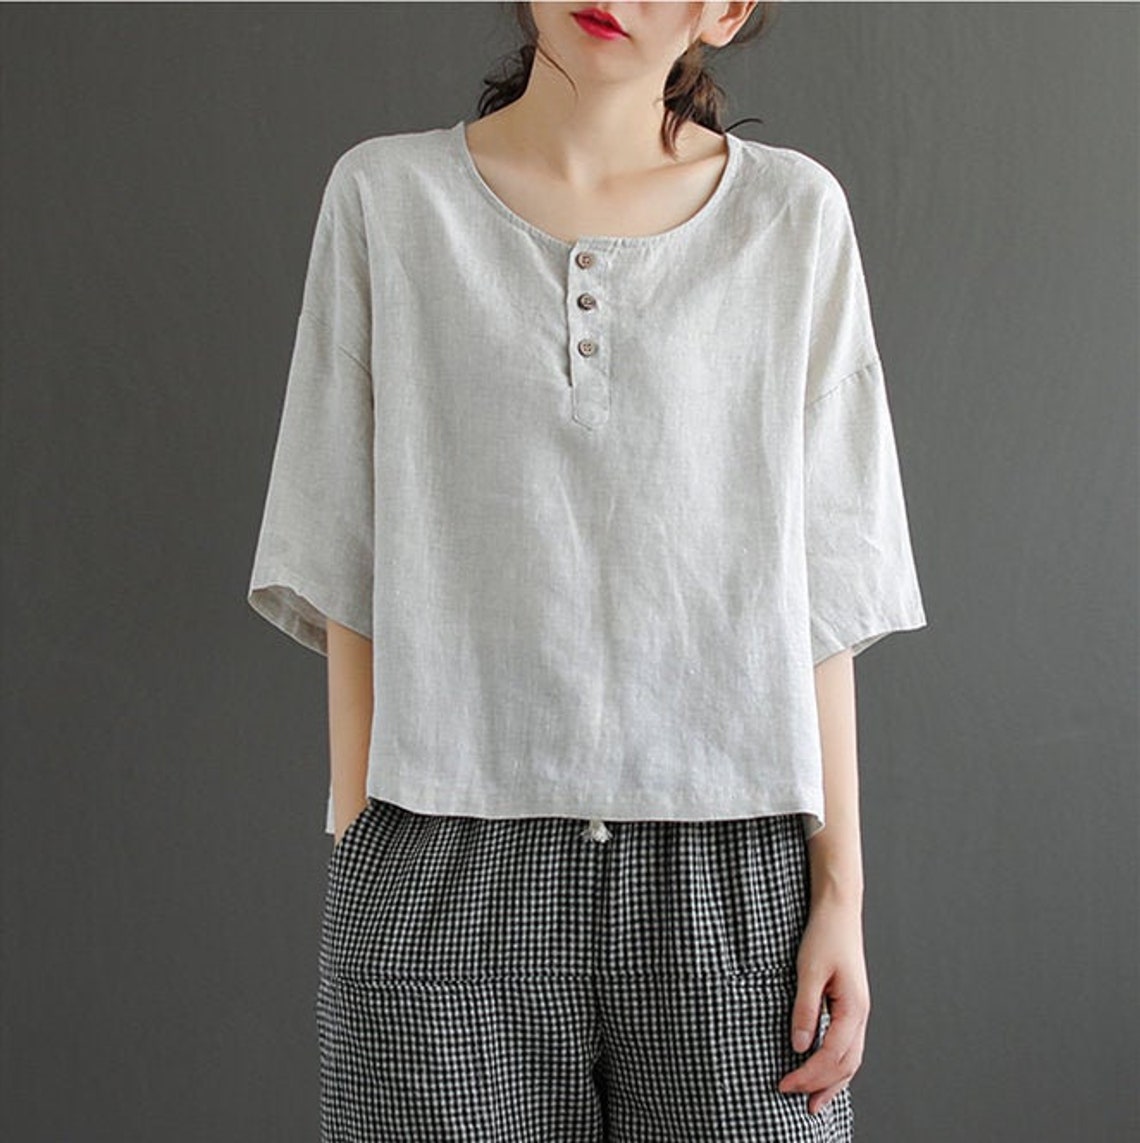 Women's pure linen tops short sleeves shirt loose linen | Etsy